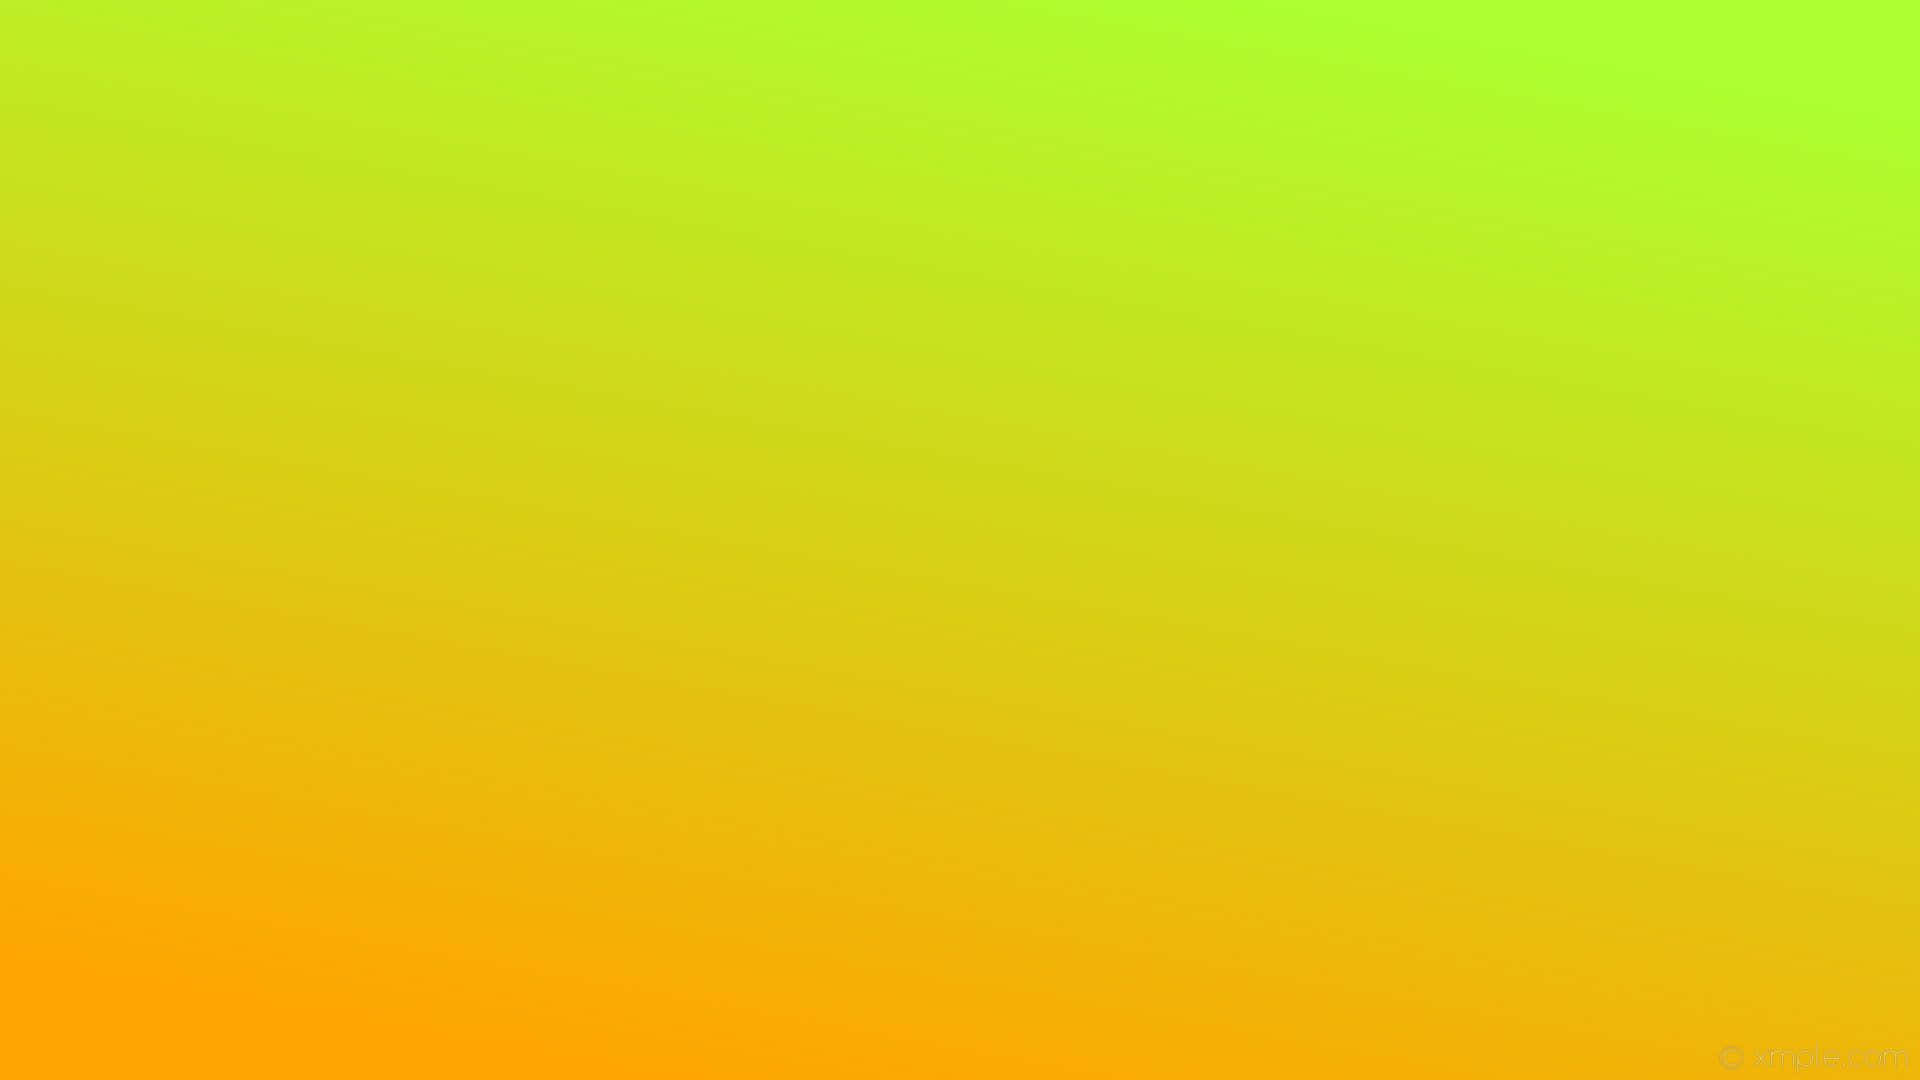 Orange And Green Background